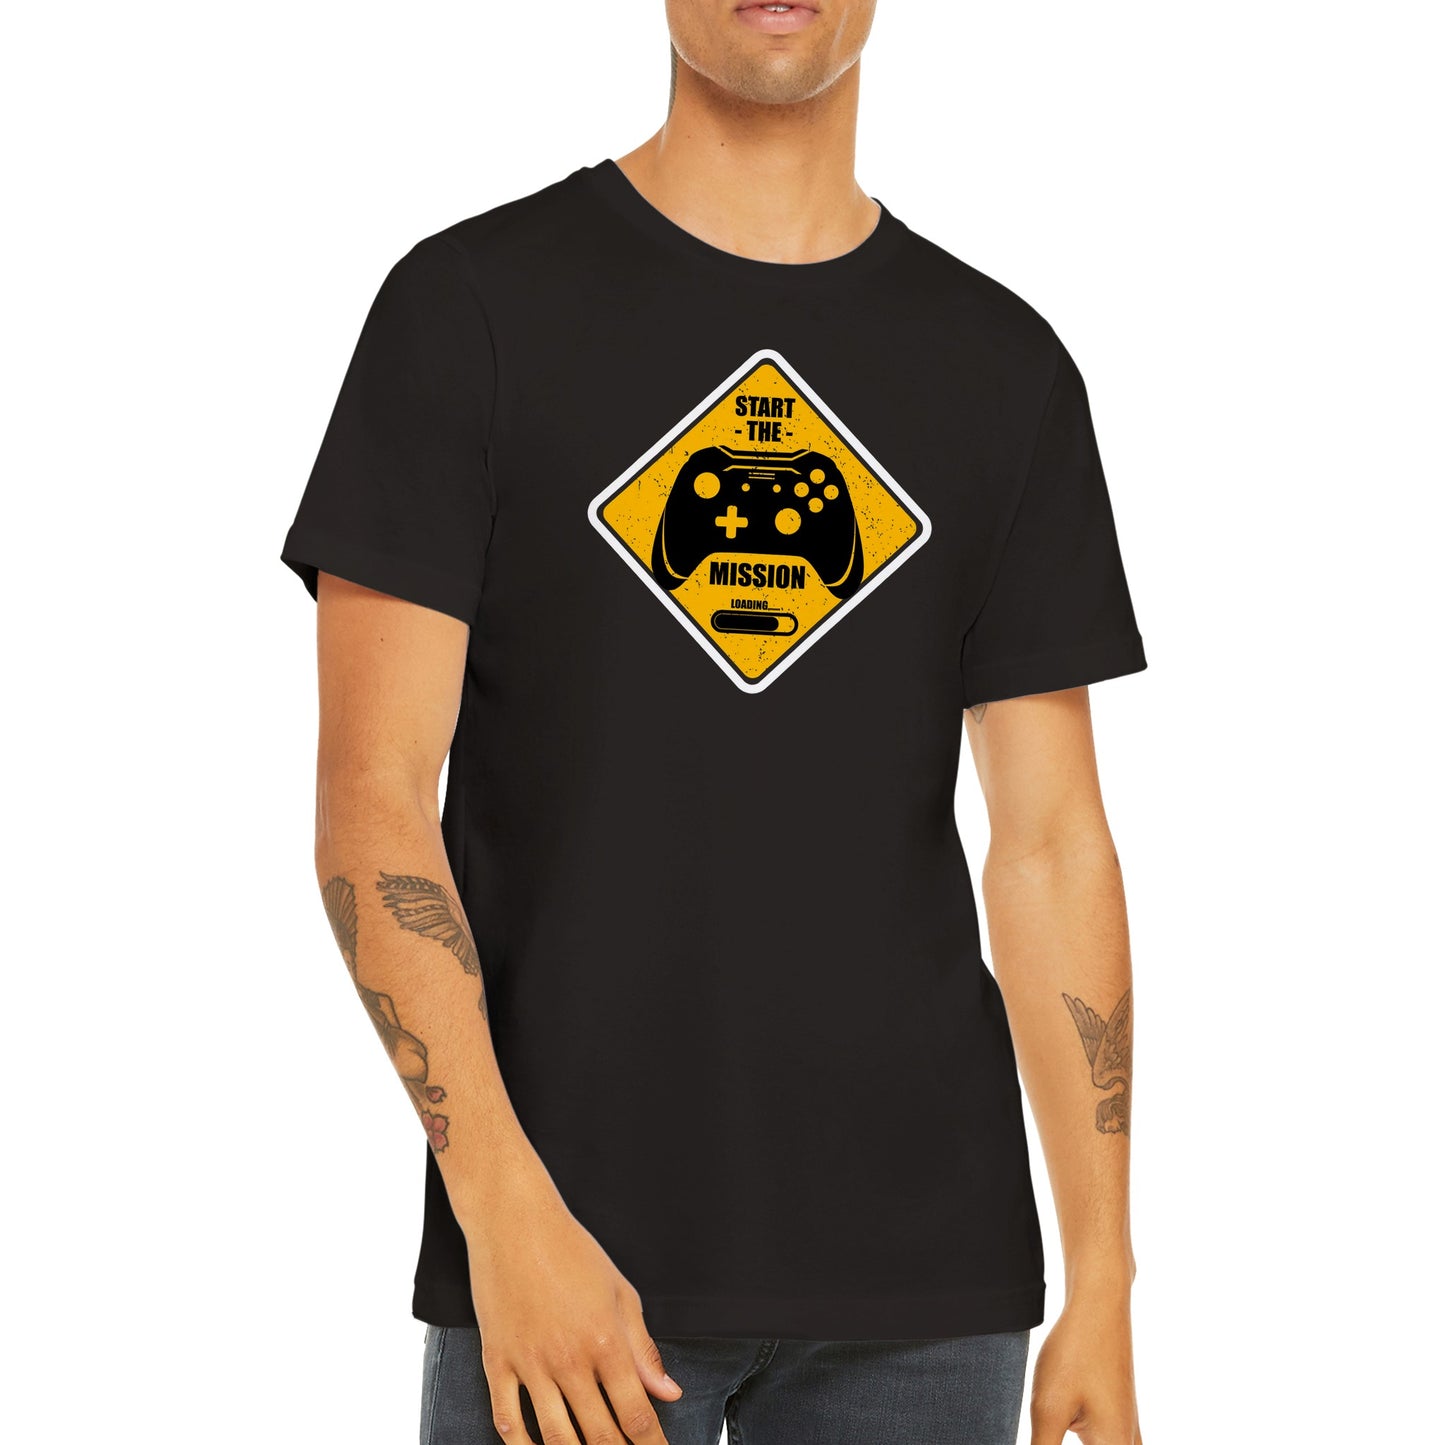 Gaming T-shirt - Start The Mission Loading - Premium Unisex T-shirt